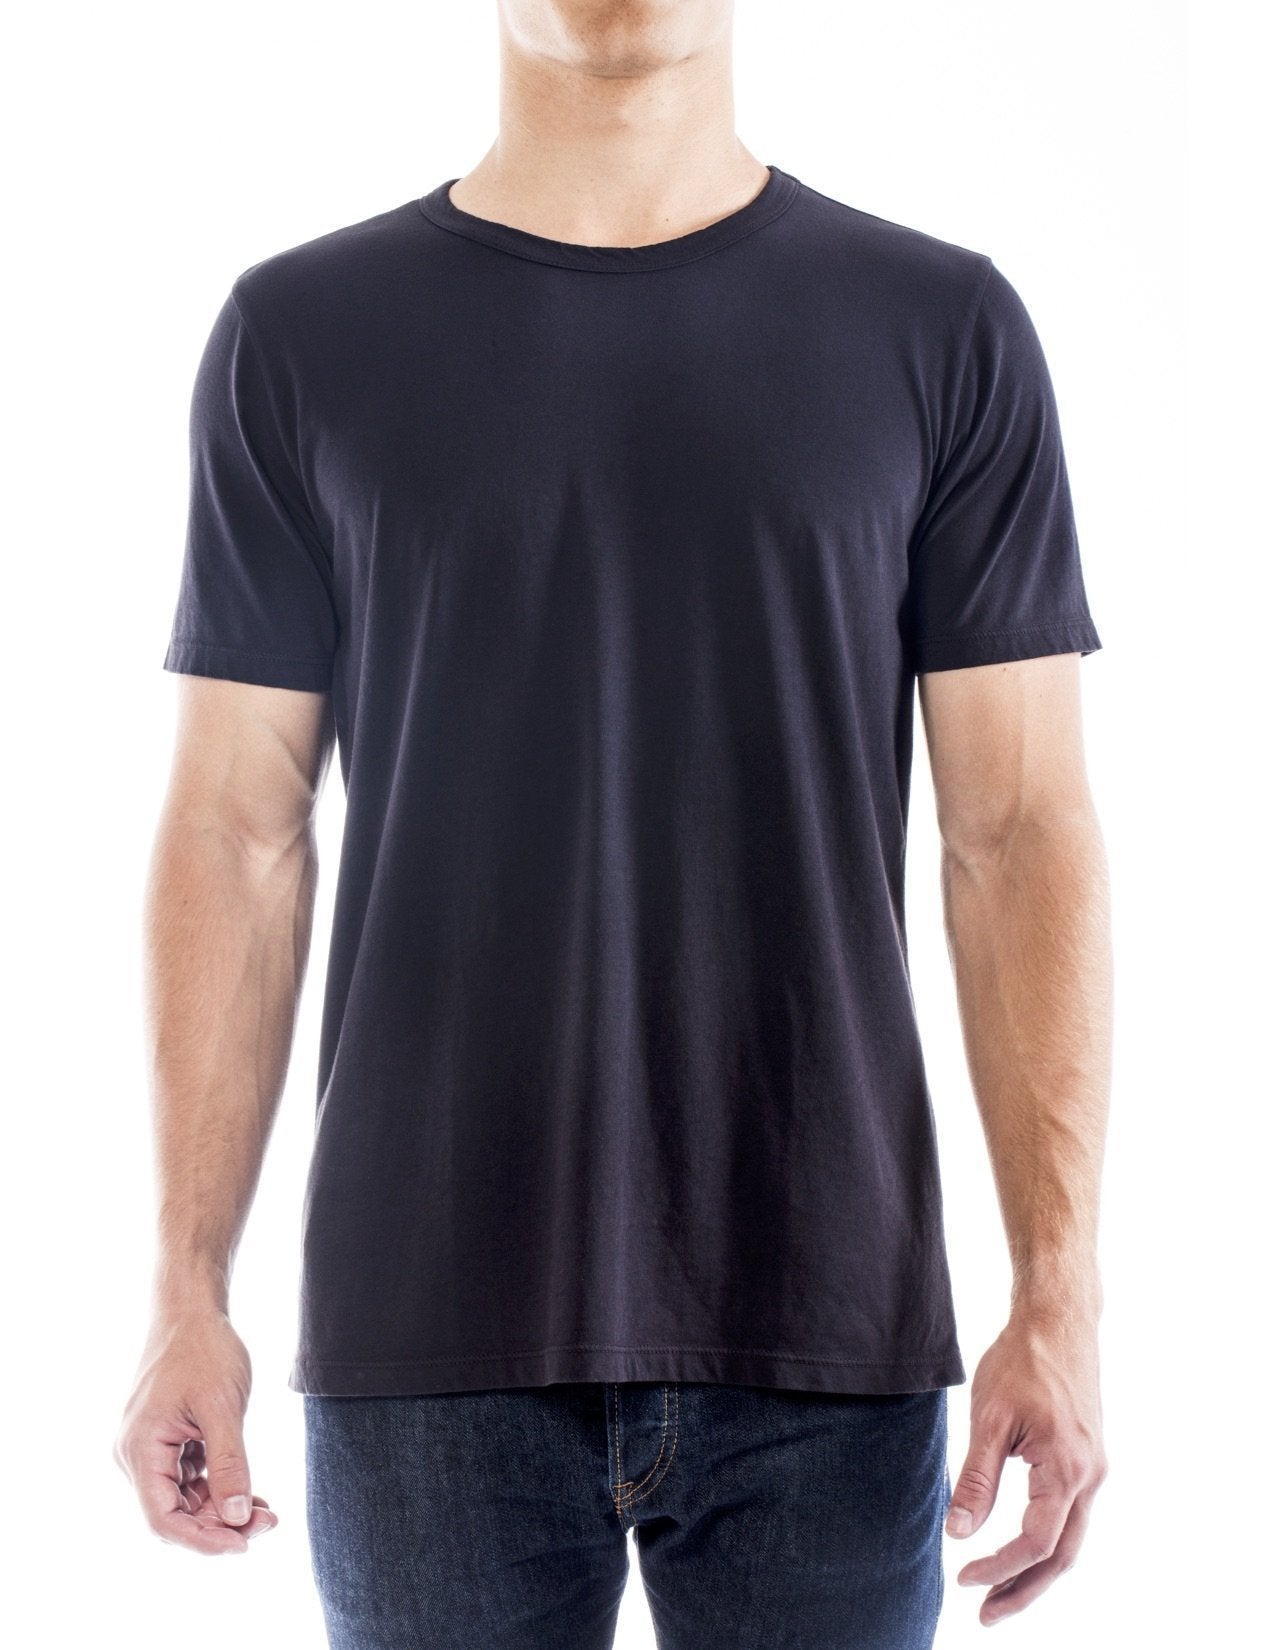 Supreme Louisiana Classic Established Men's Cotton T-Shirt